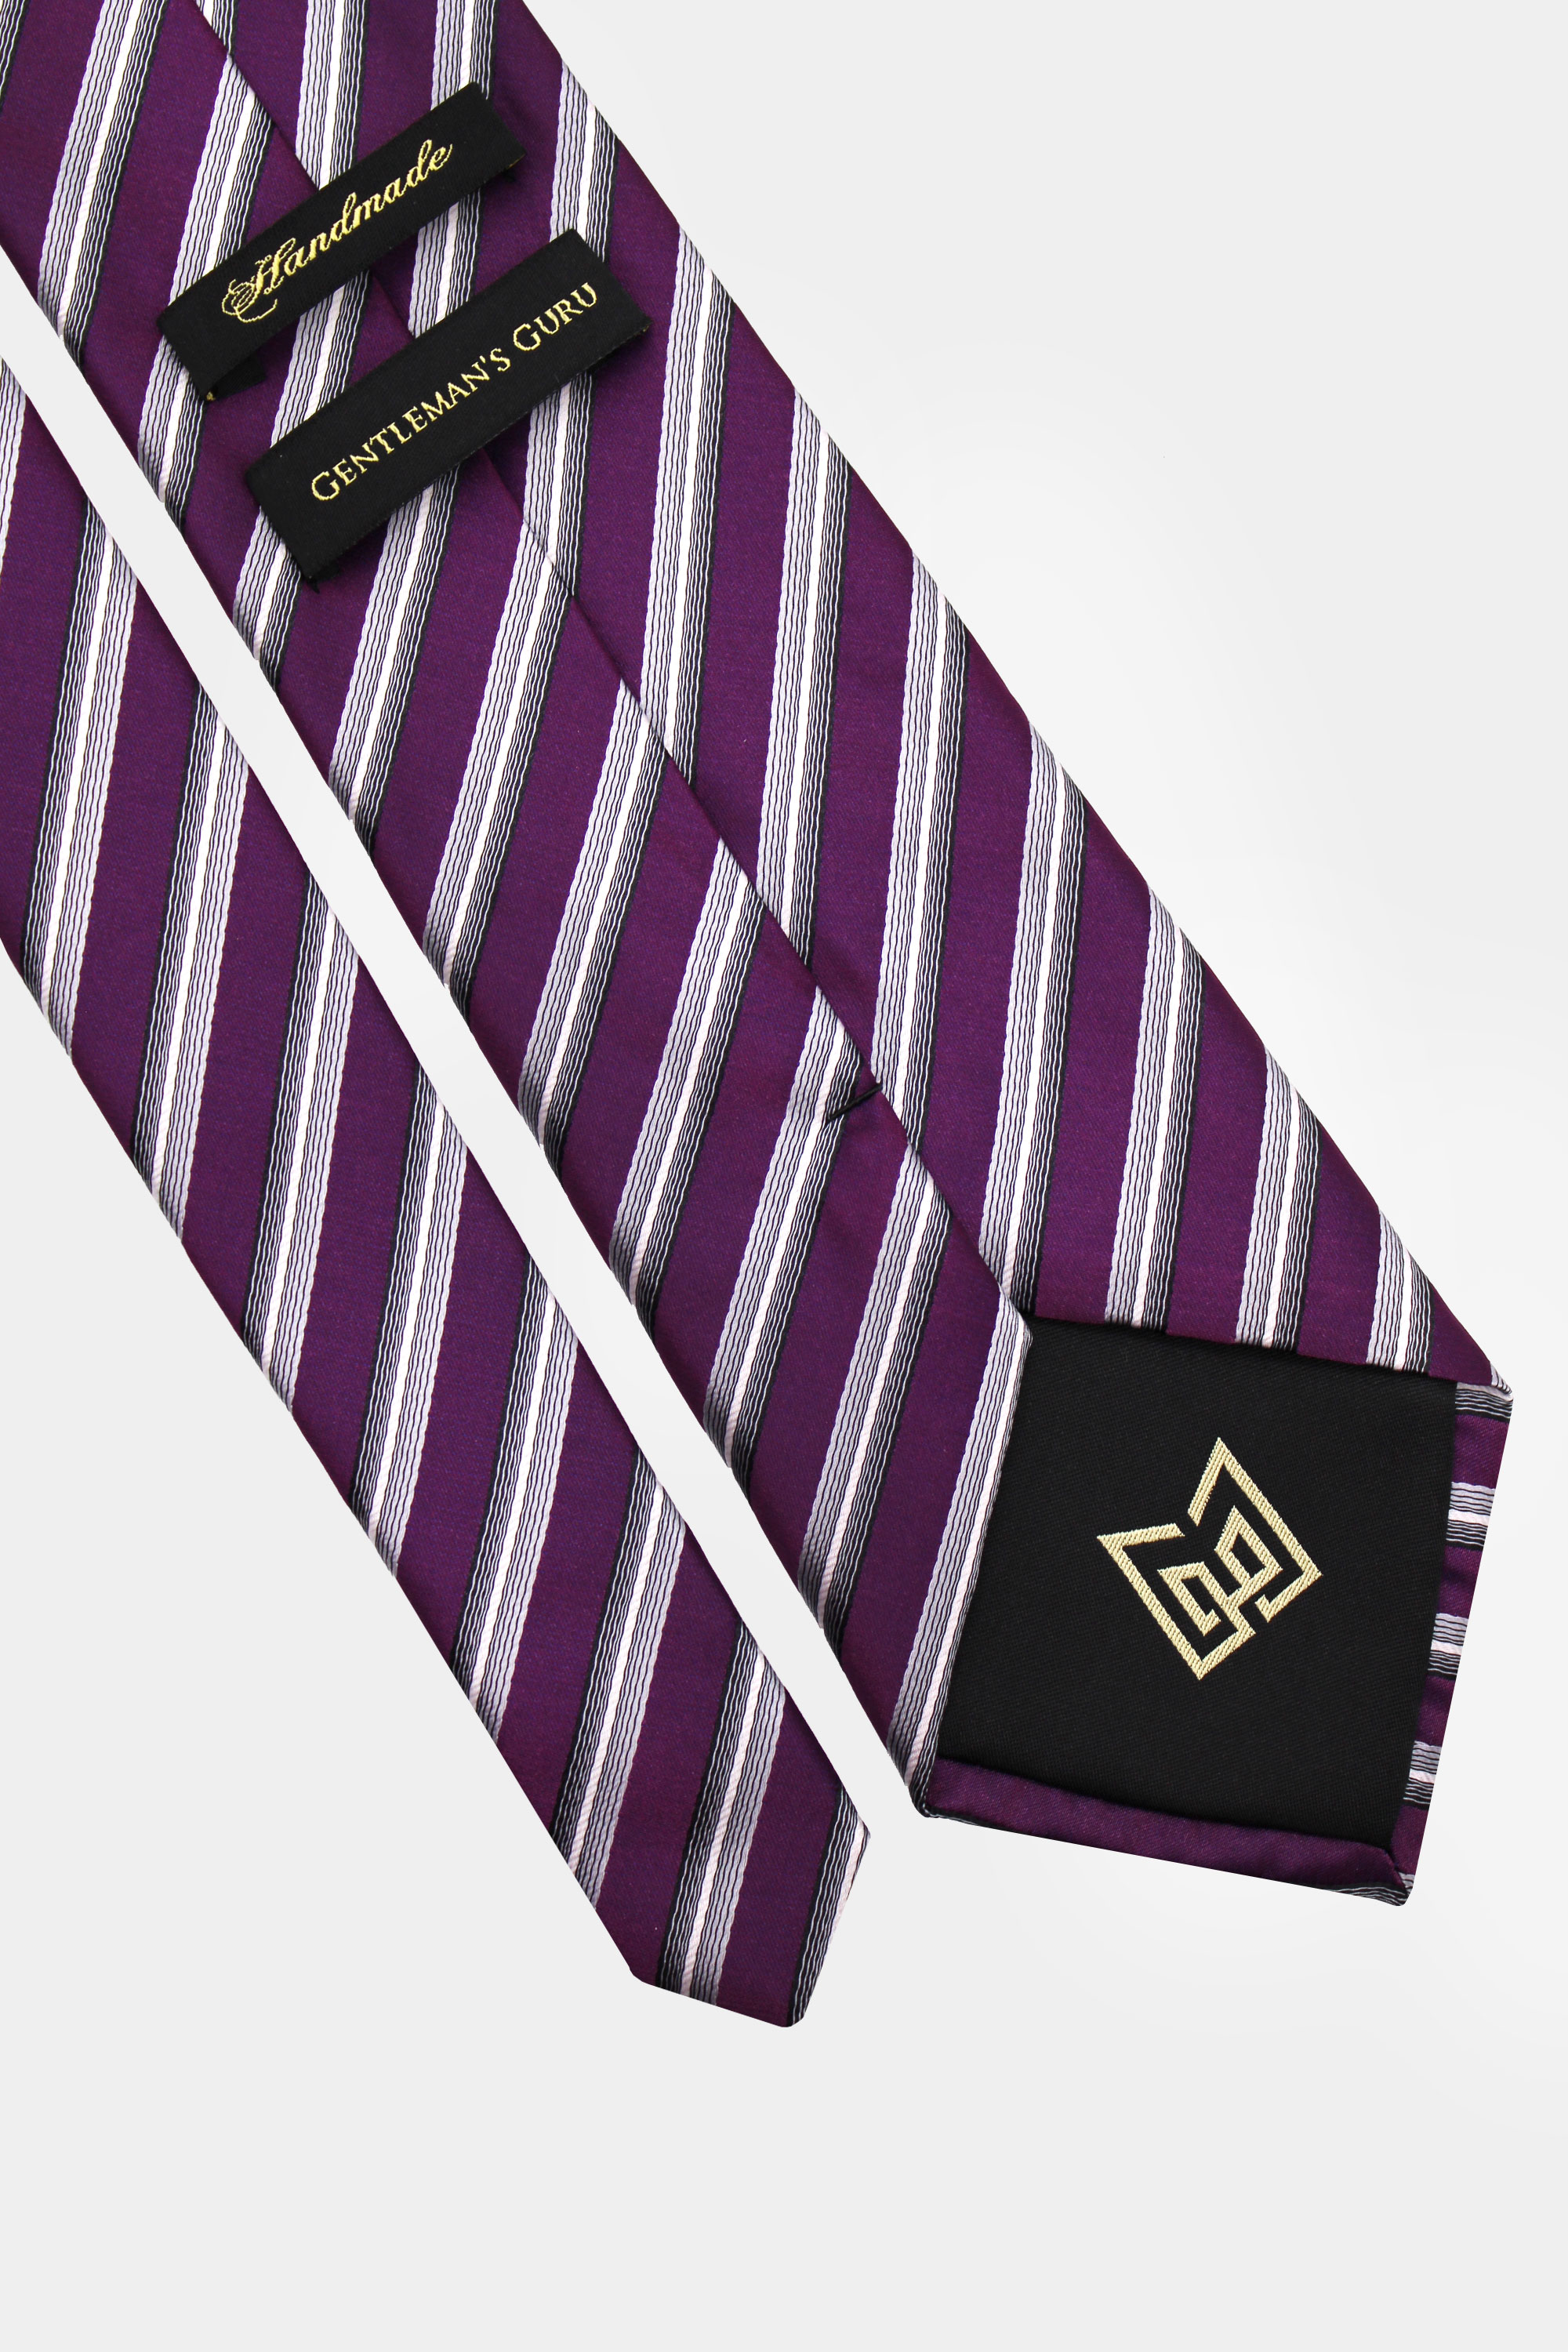 Grey-and-Purple-Striped-Tie-from-Gentlemansguru.com